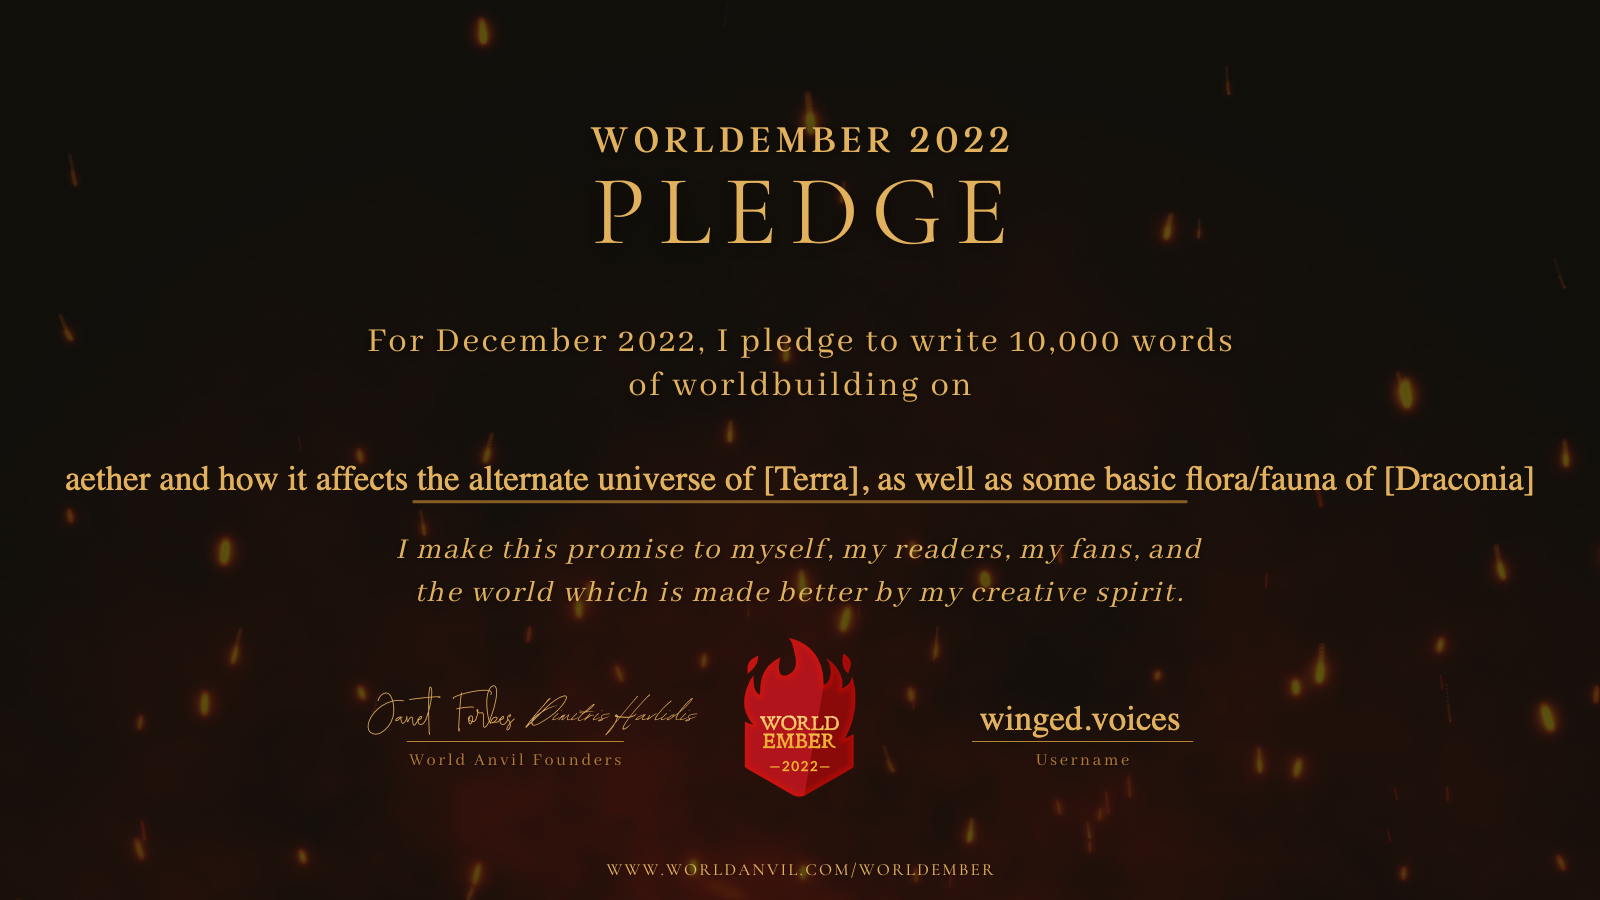 WorldEmber 2022 Pledge Document, stating that my pledge is 